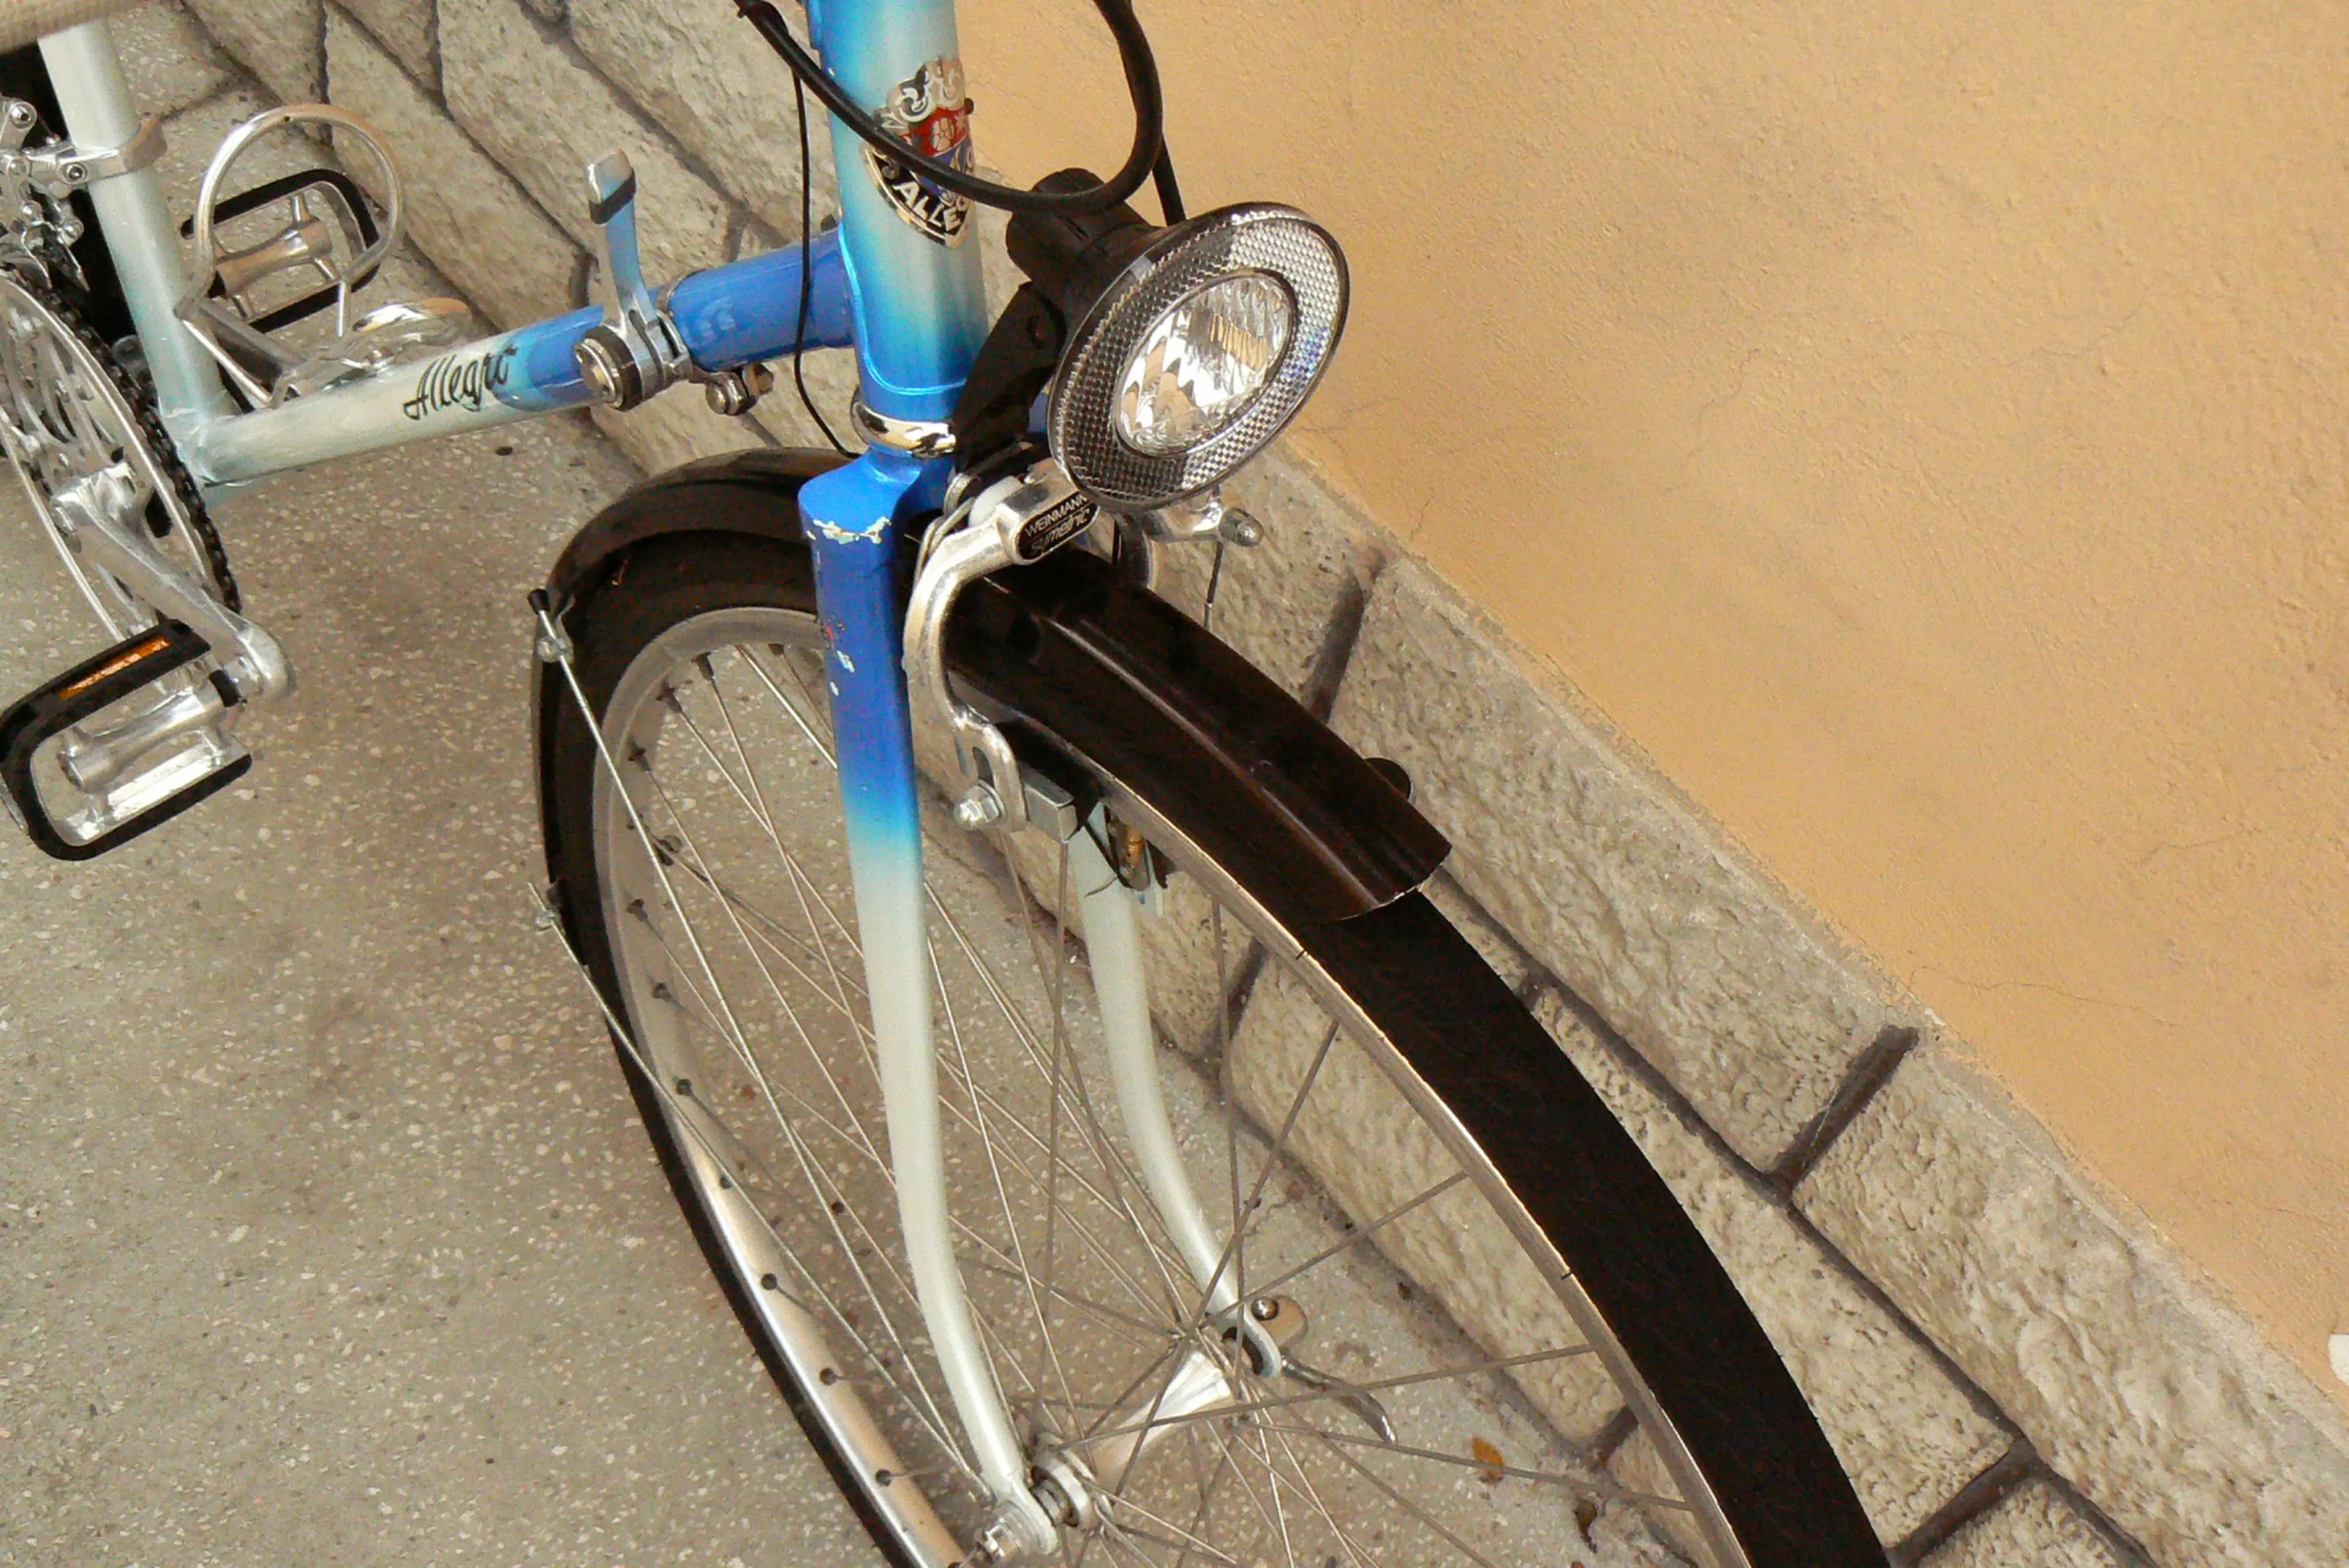 2. Bicicleta Allegro